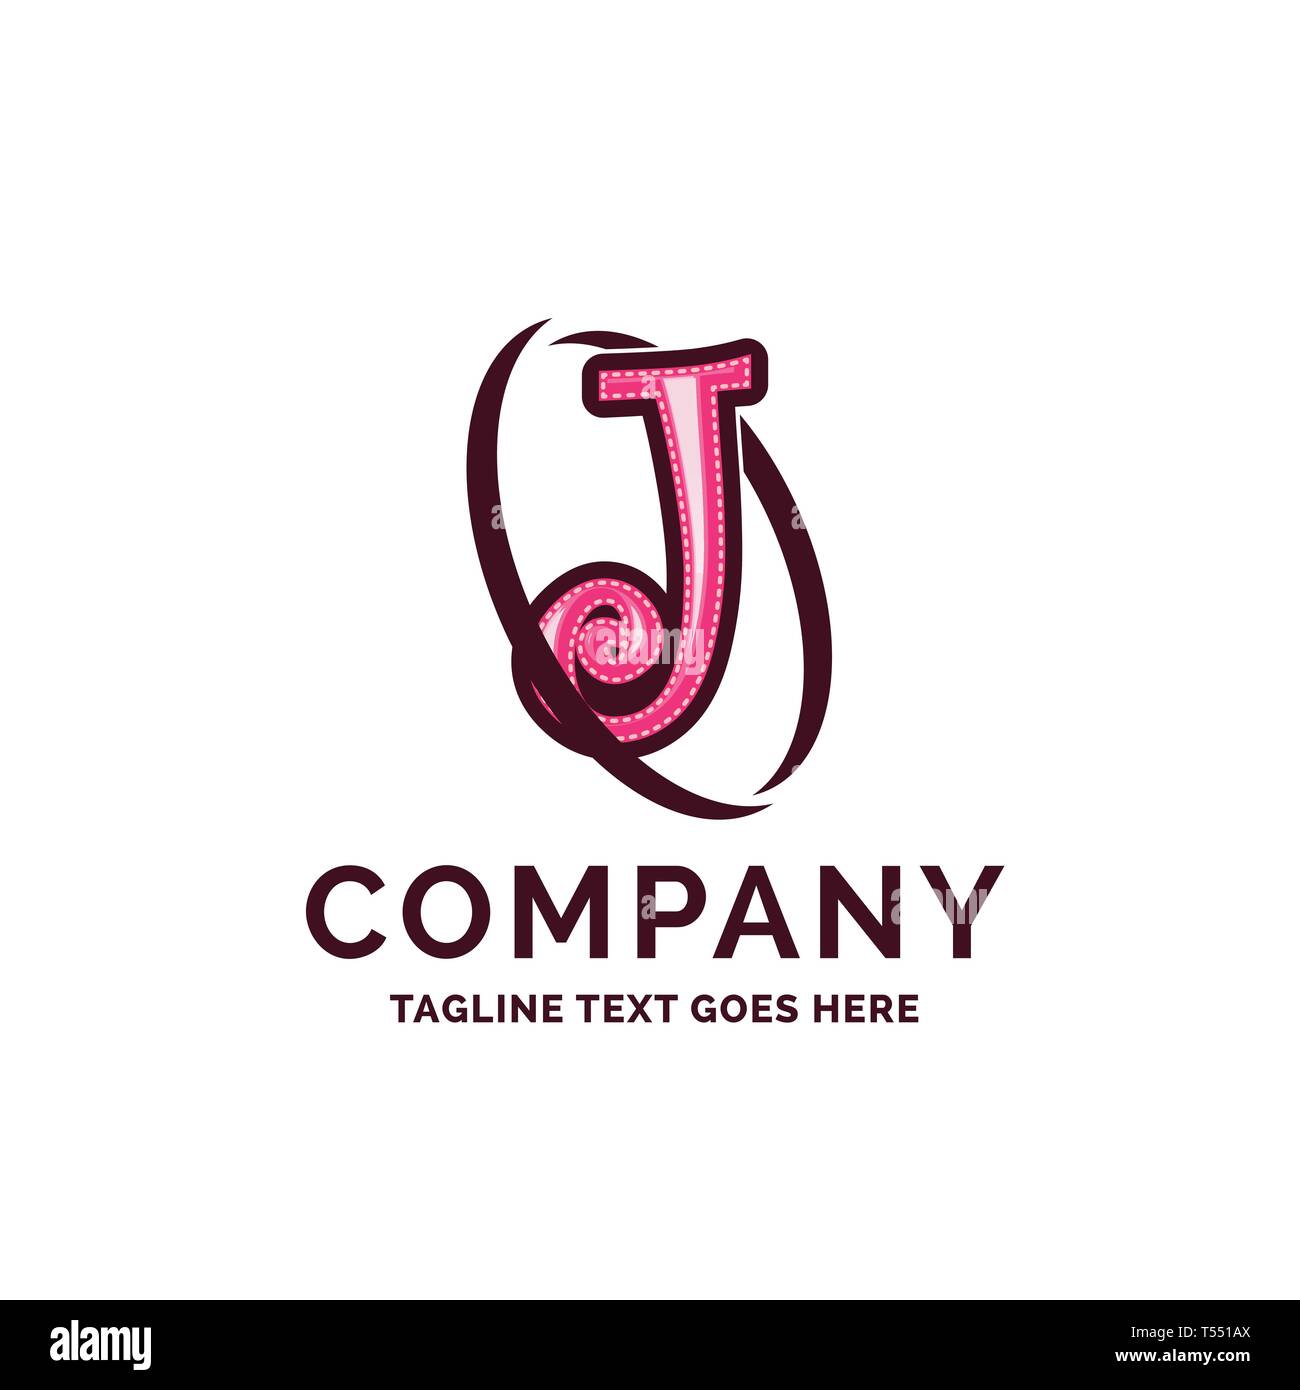 J company